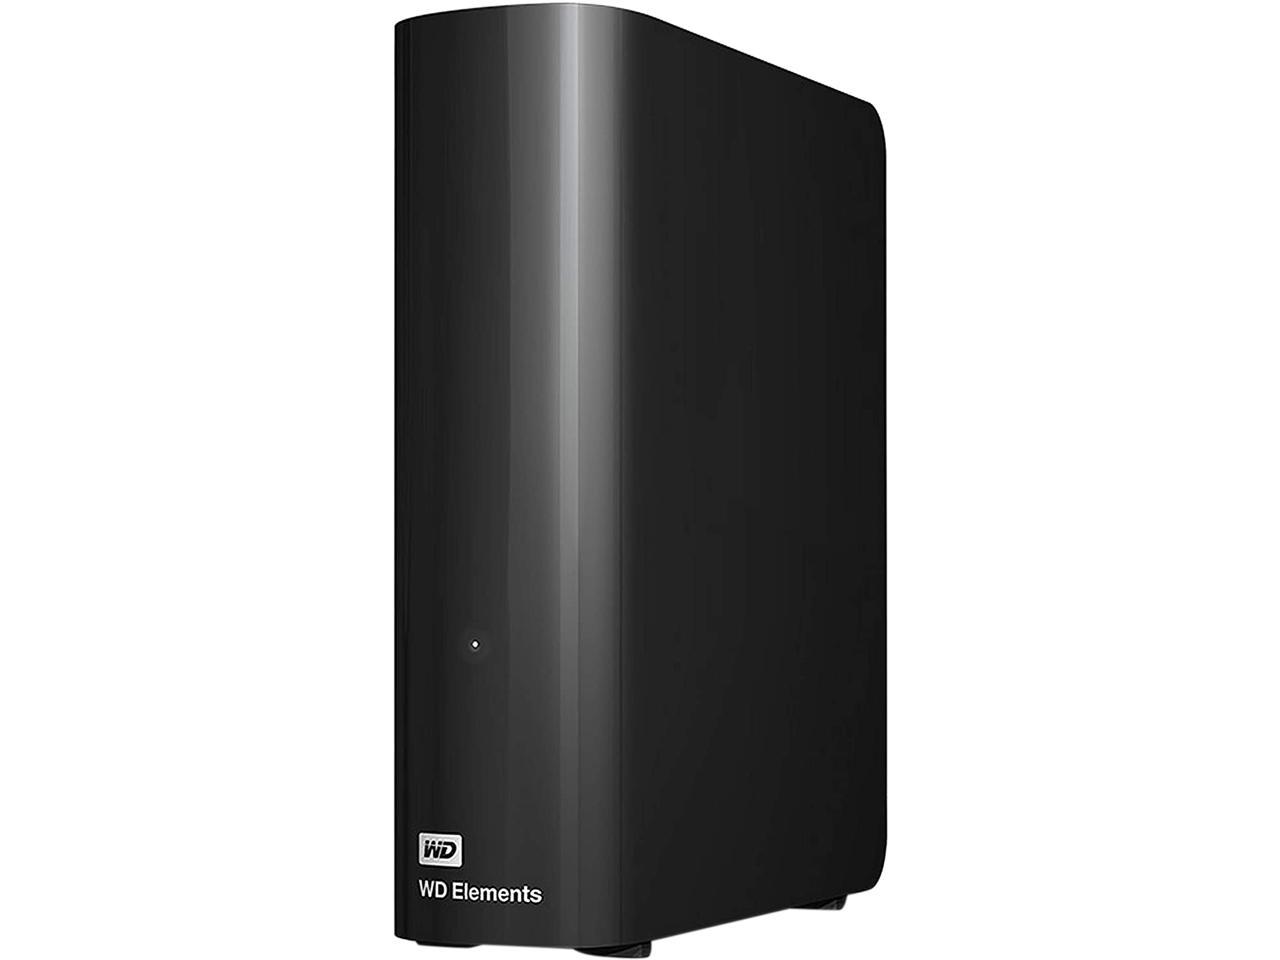 16TB WD Elements Desktop Hard Drive $270 at Newegg